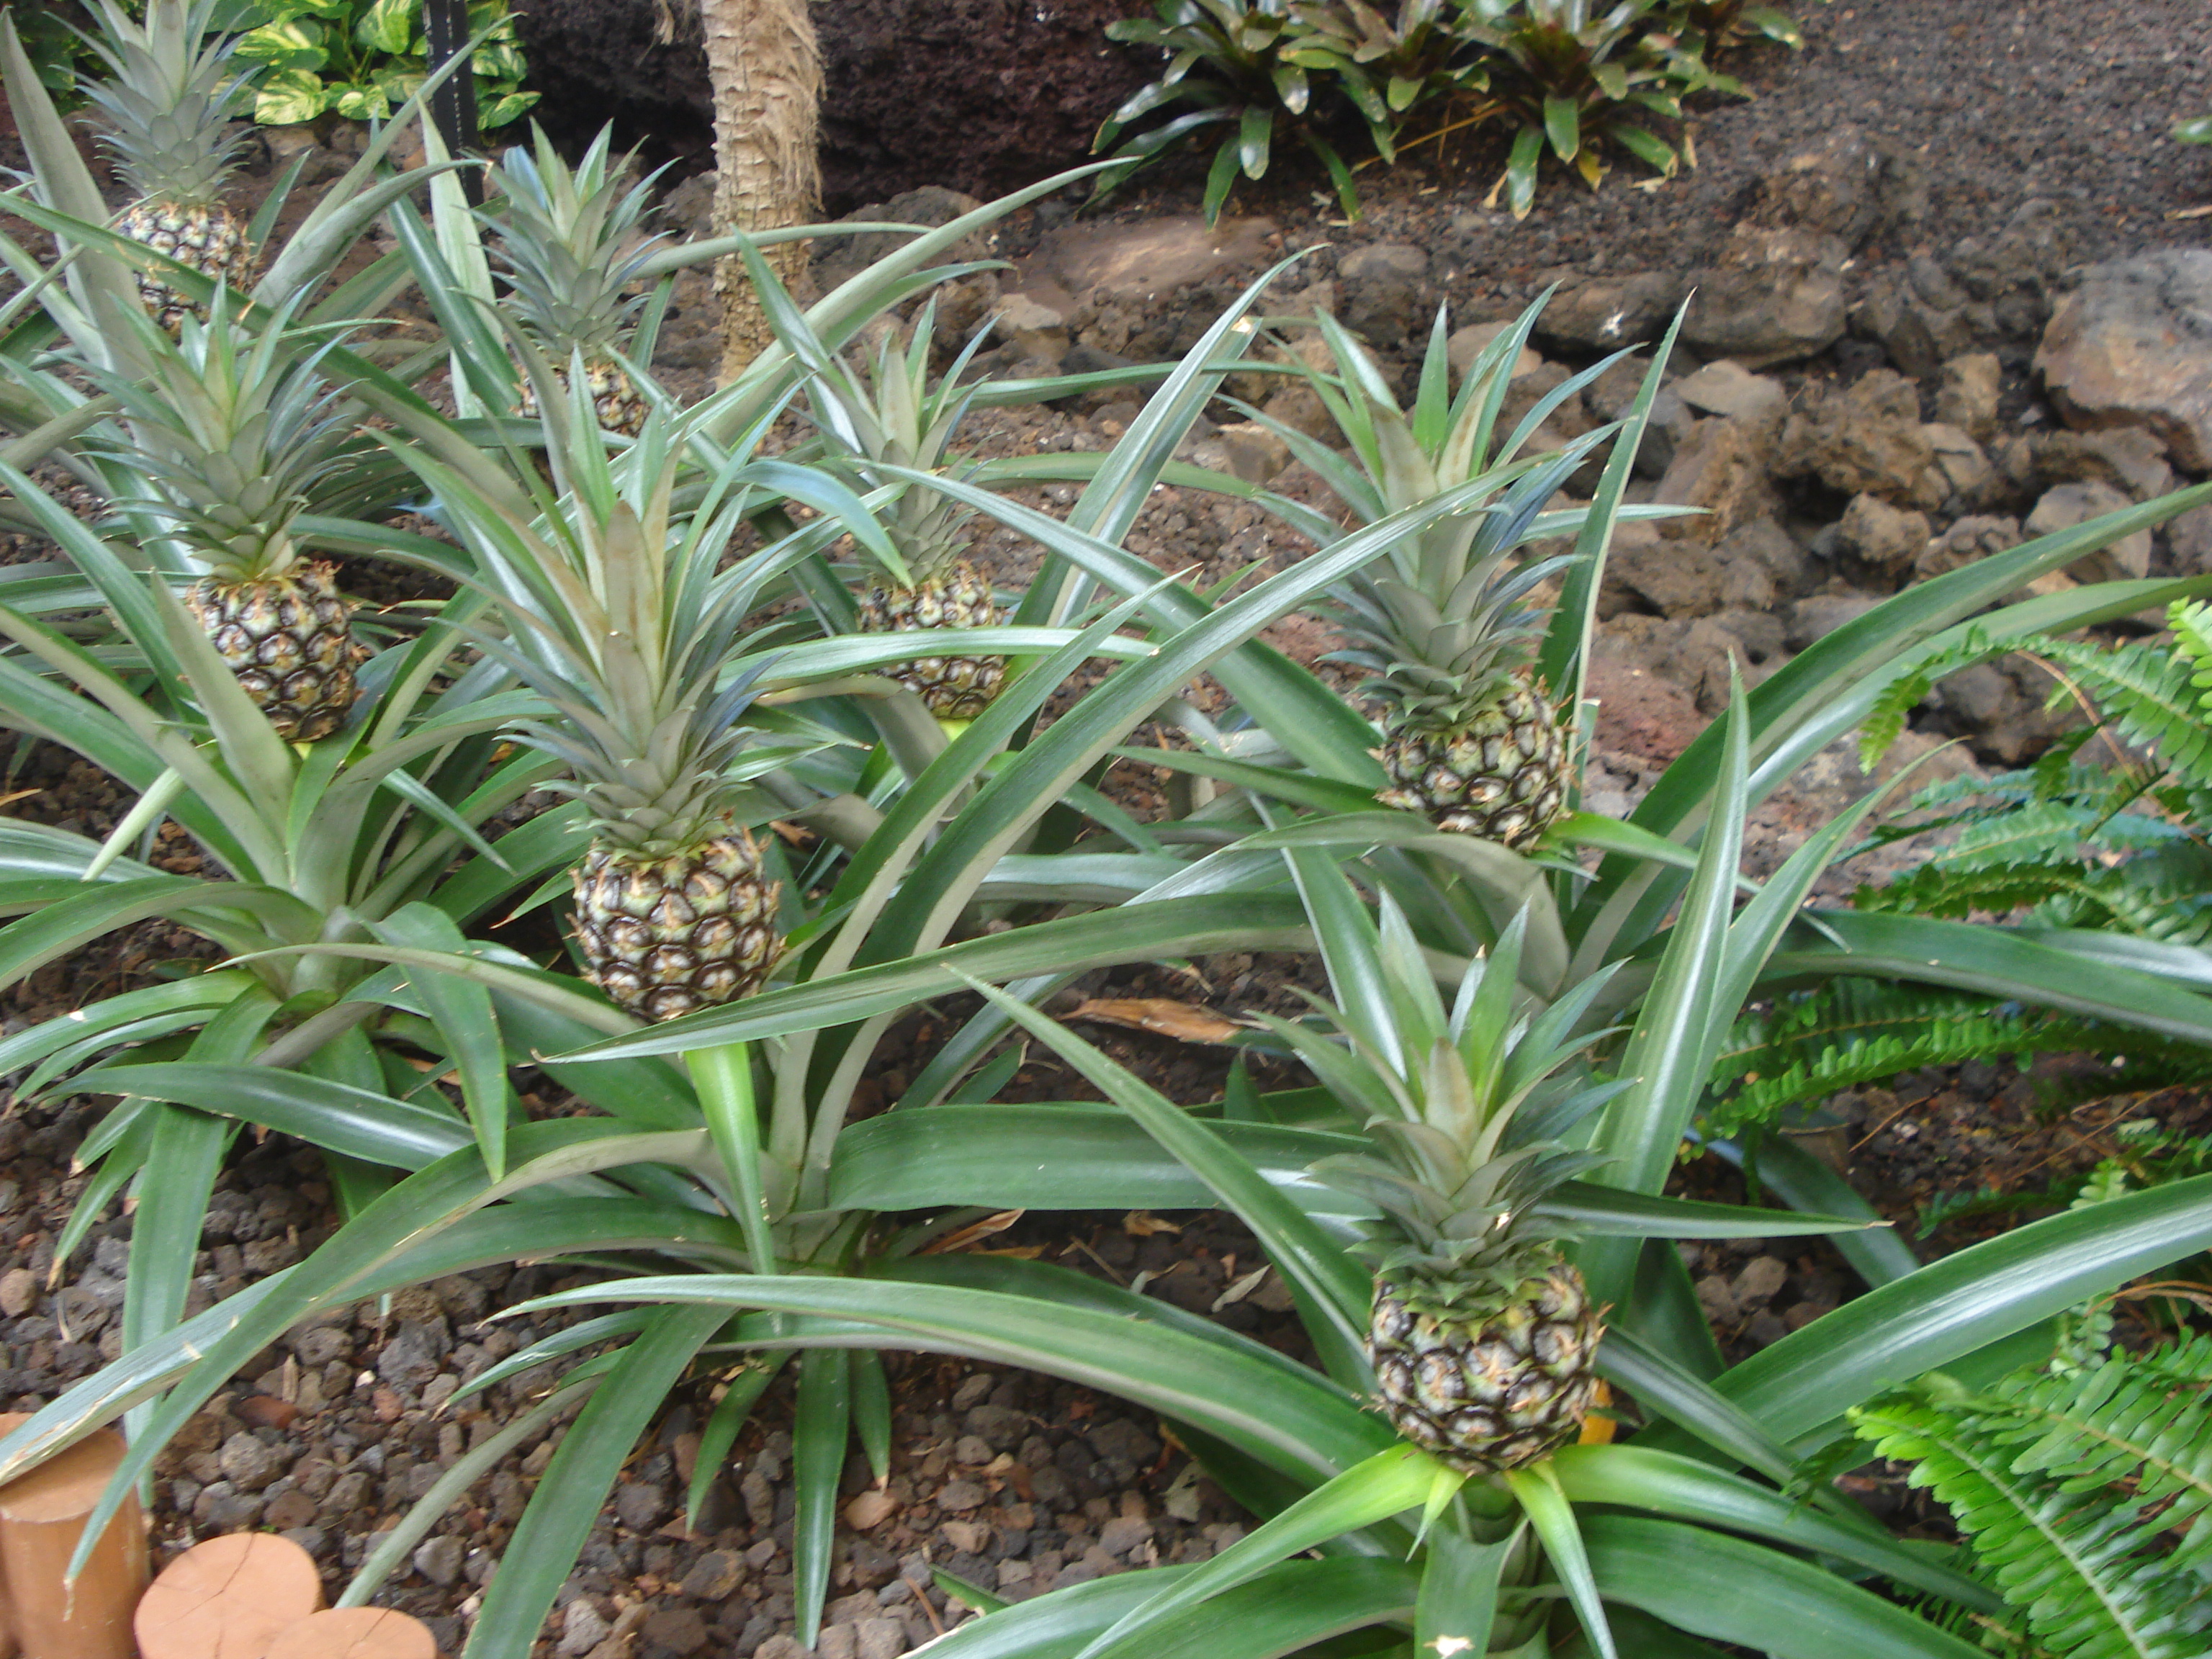 How do pineapples grow?